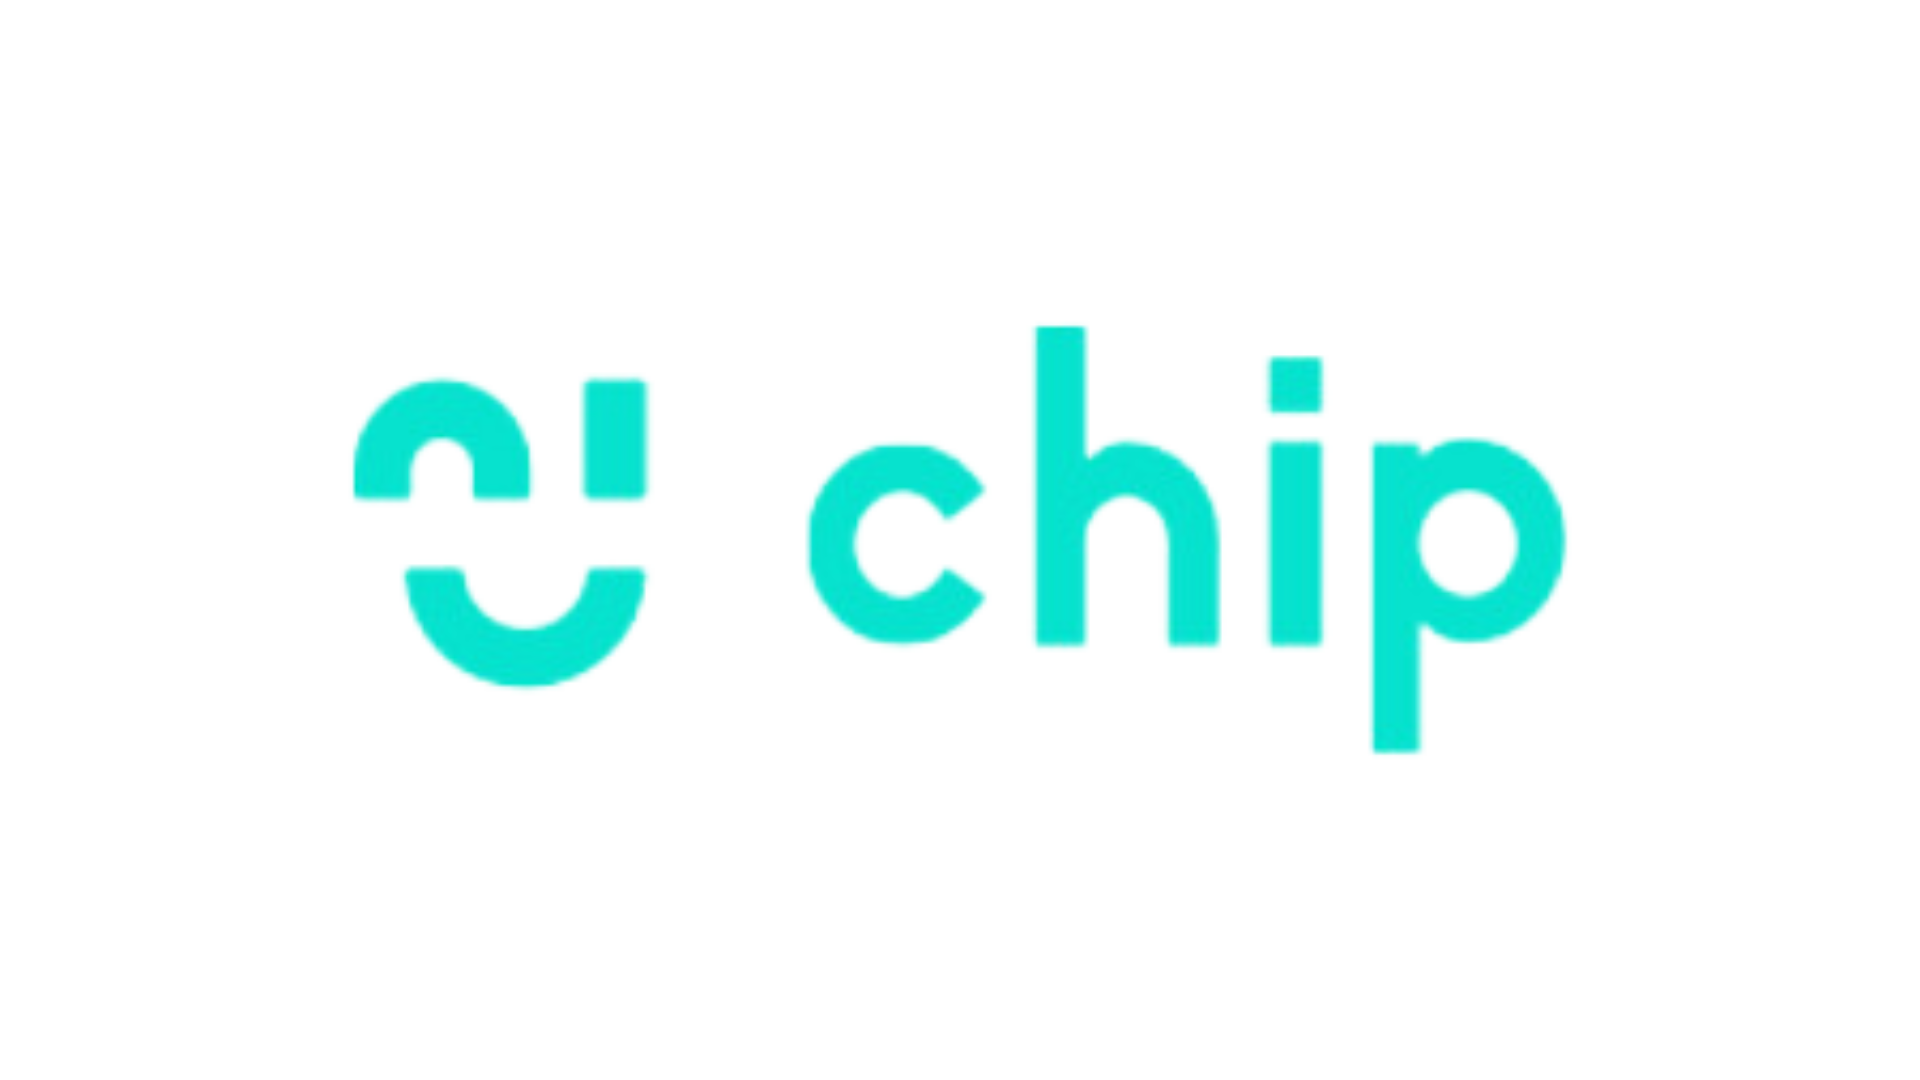 chip logo